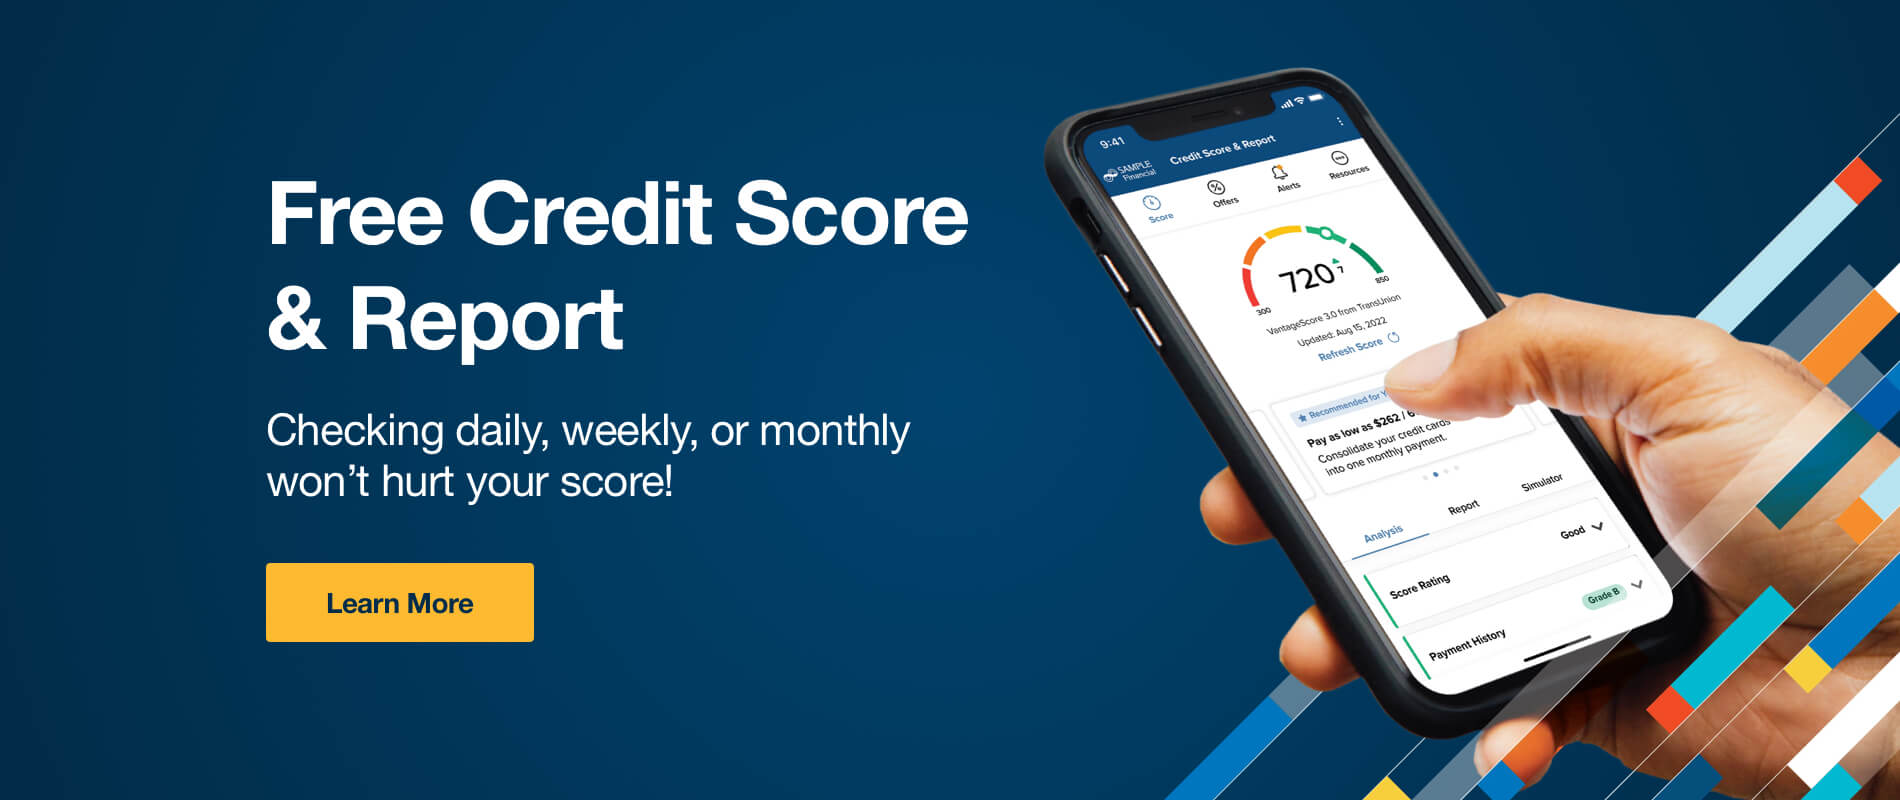 Free Credit Score & Report